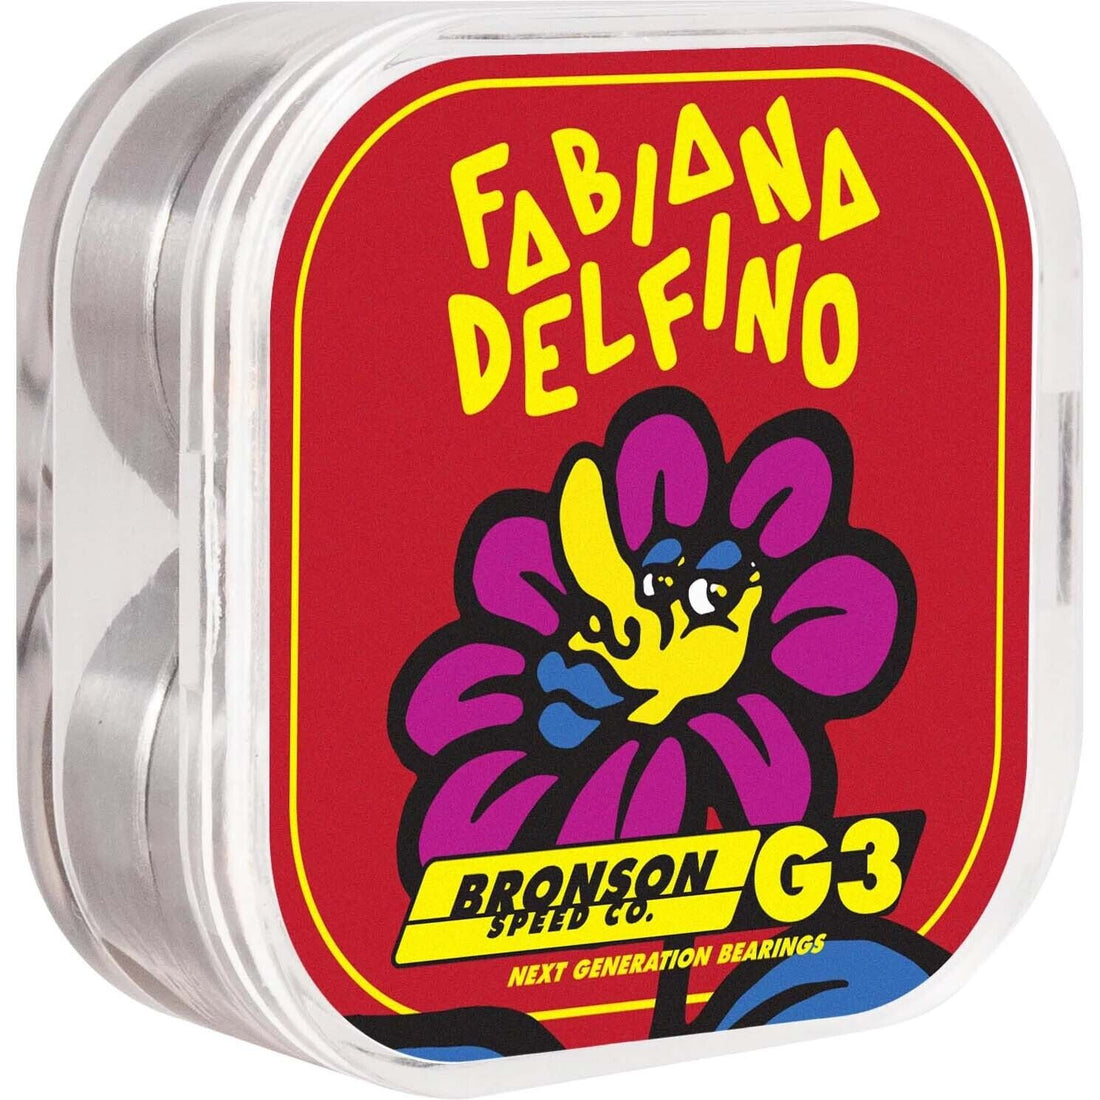 Bronson Speed Co. Fabiana Delfino Pro G3 Skateboard Bearings Pack of 8